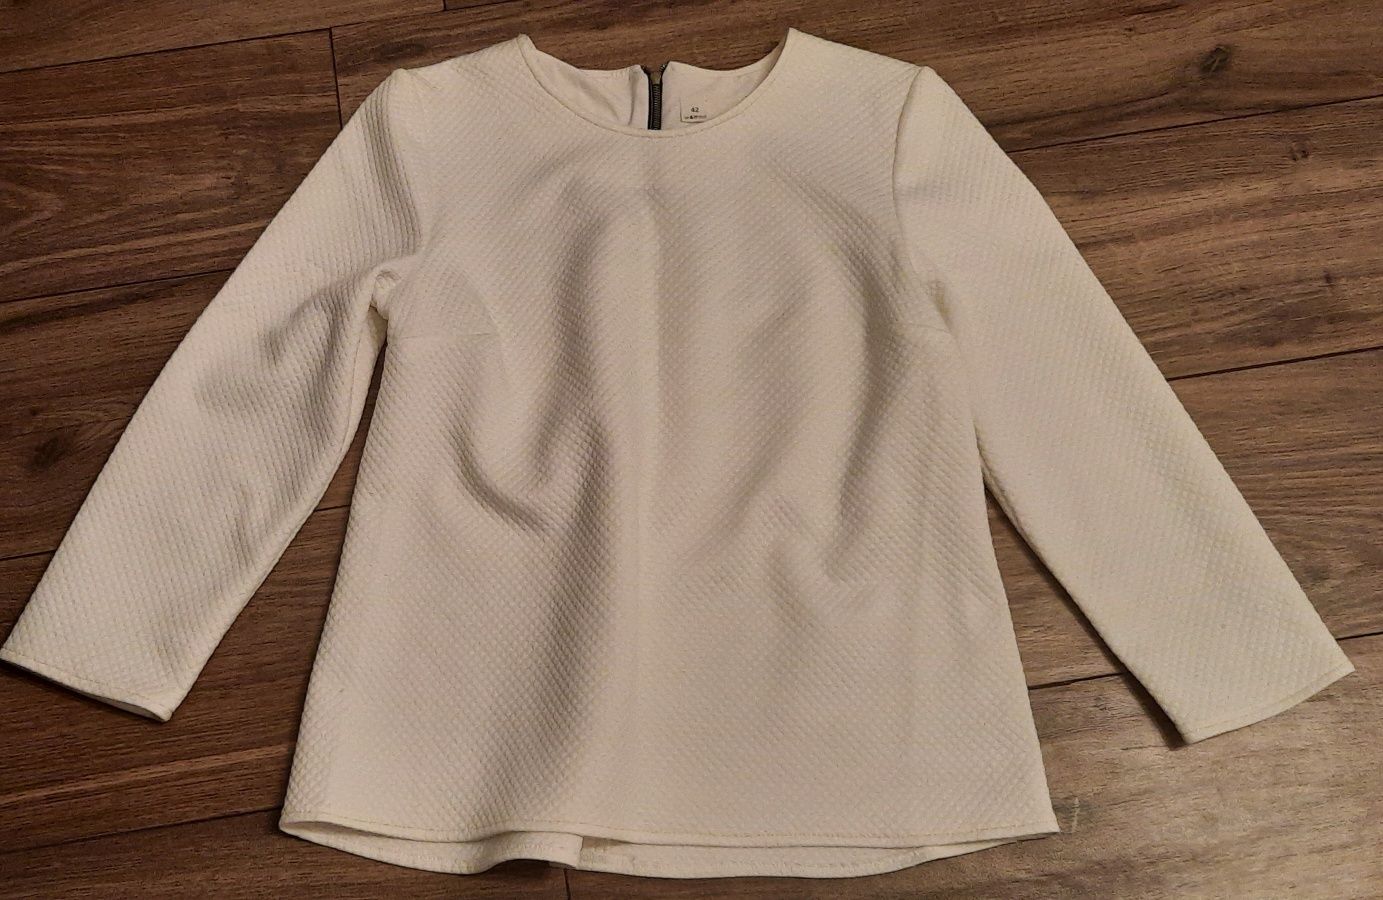 Bluzka damska biala rozmiar 42, material tloczony